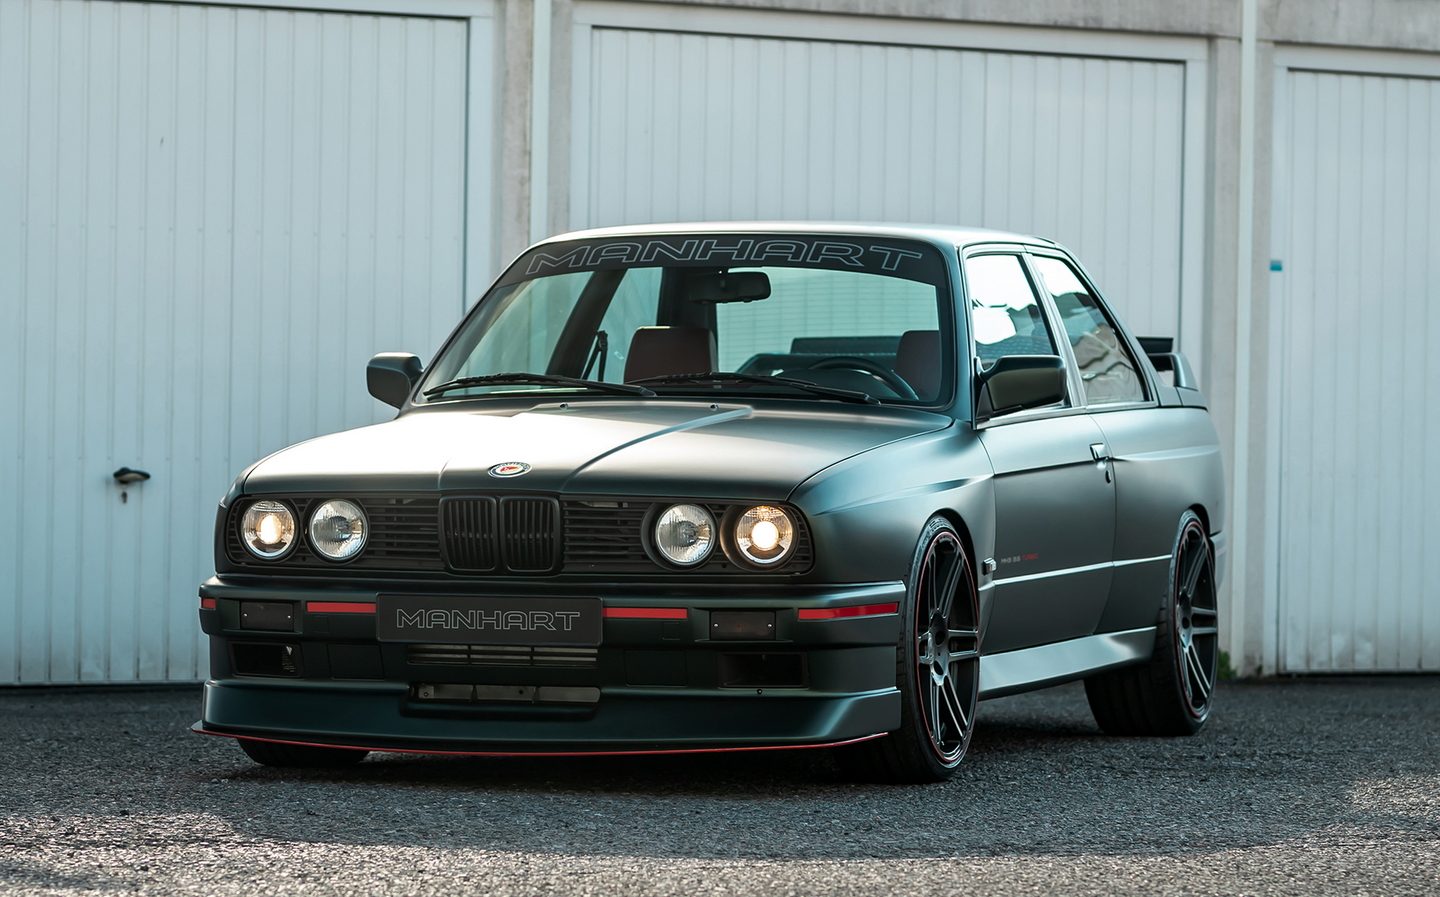 German tuning firm creates 1980s BMW M3 restomod with nearly 400bhp